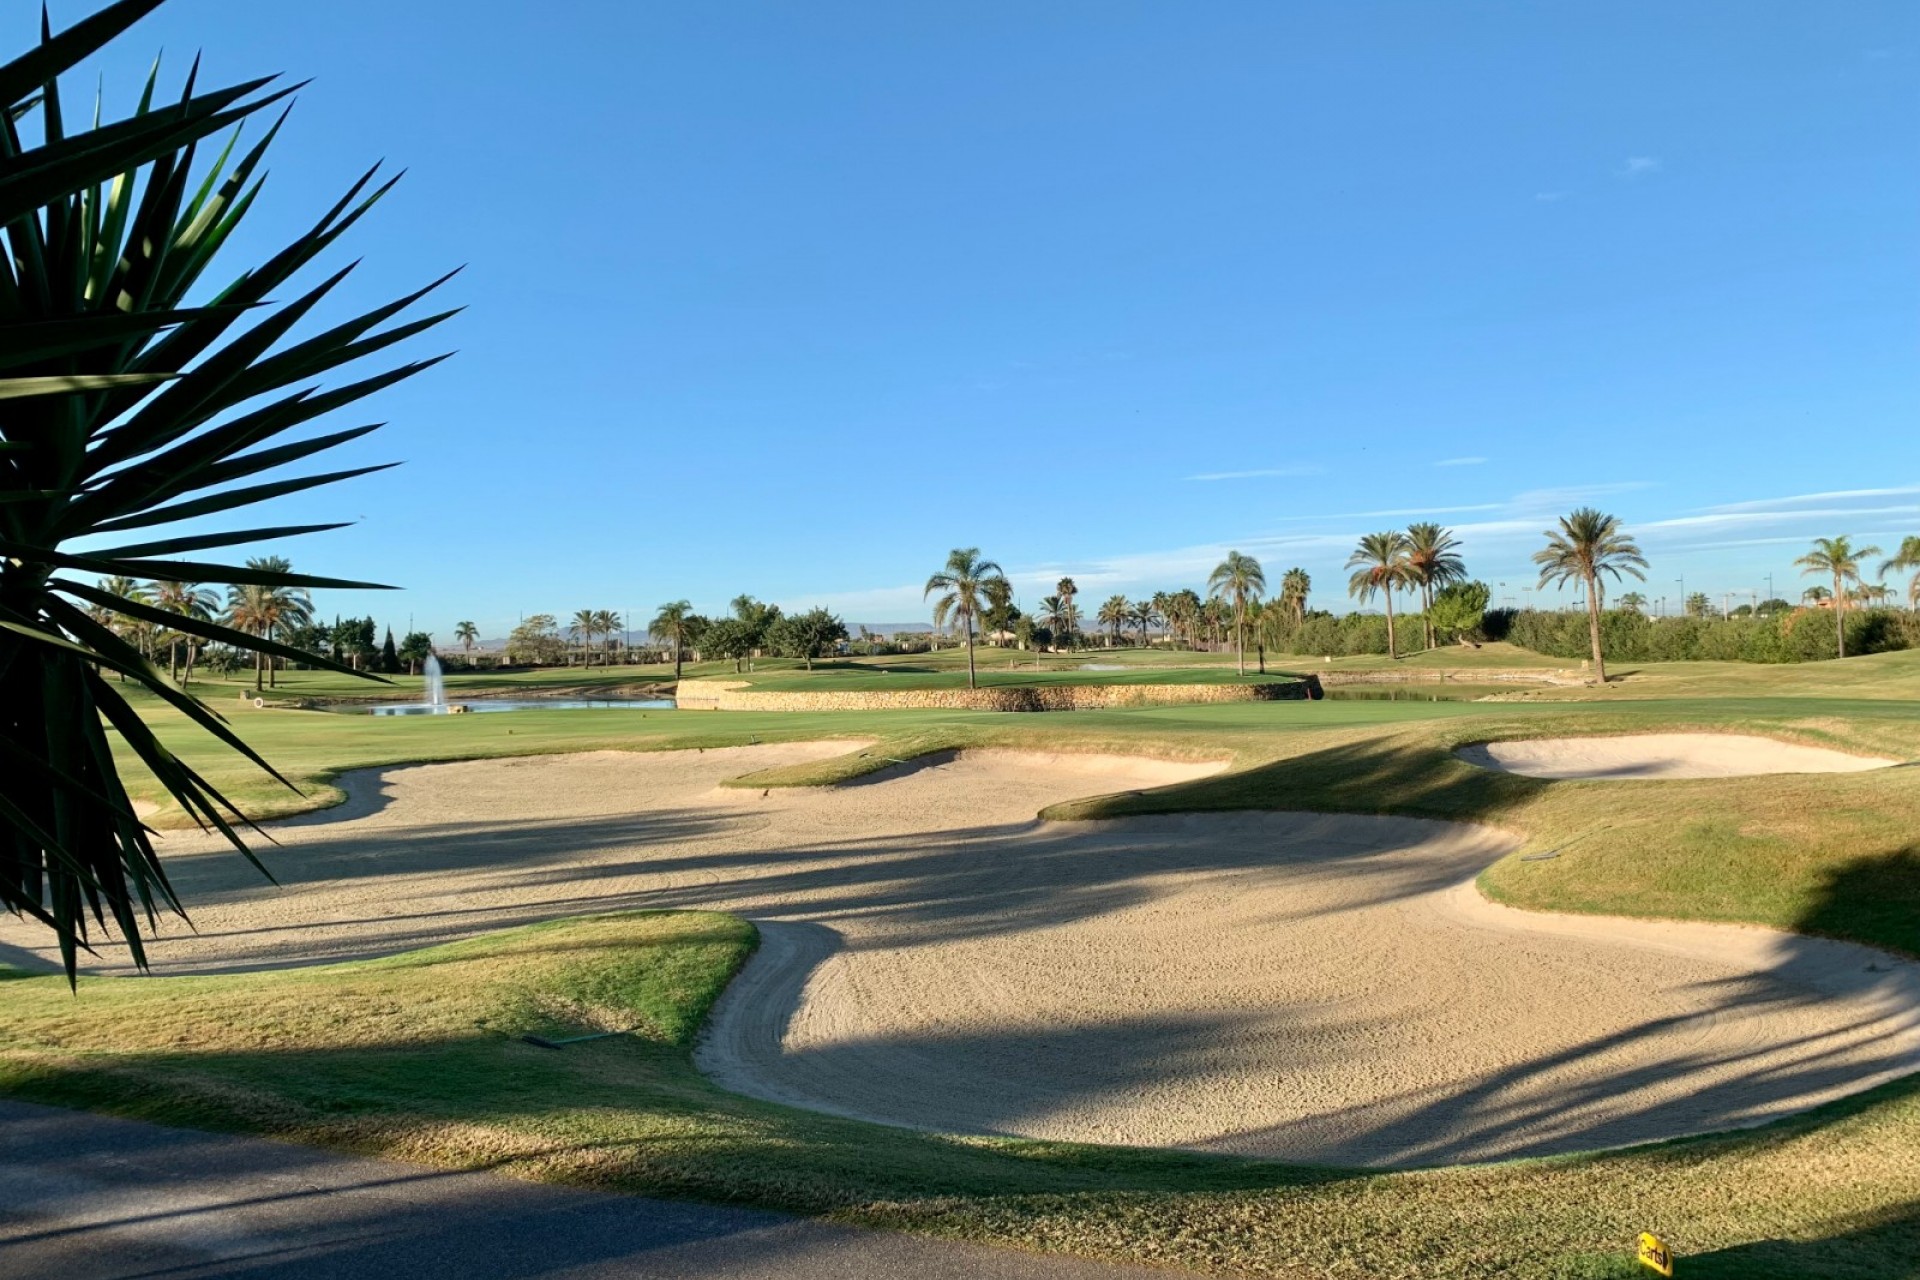 Obra nueva - Chalet de golf - Roda Golf & Beach Resort, San Javier - Costa Calida